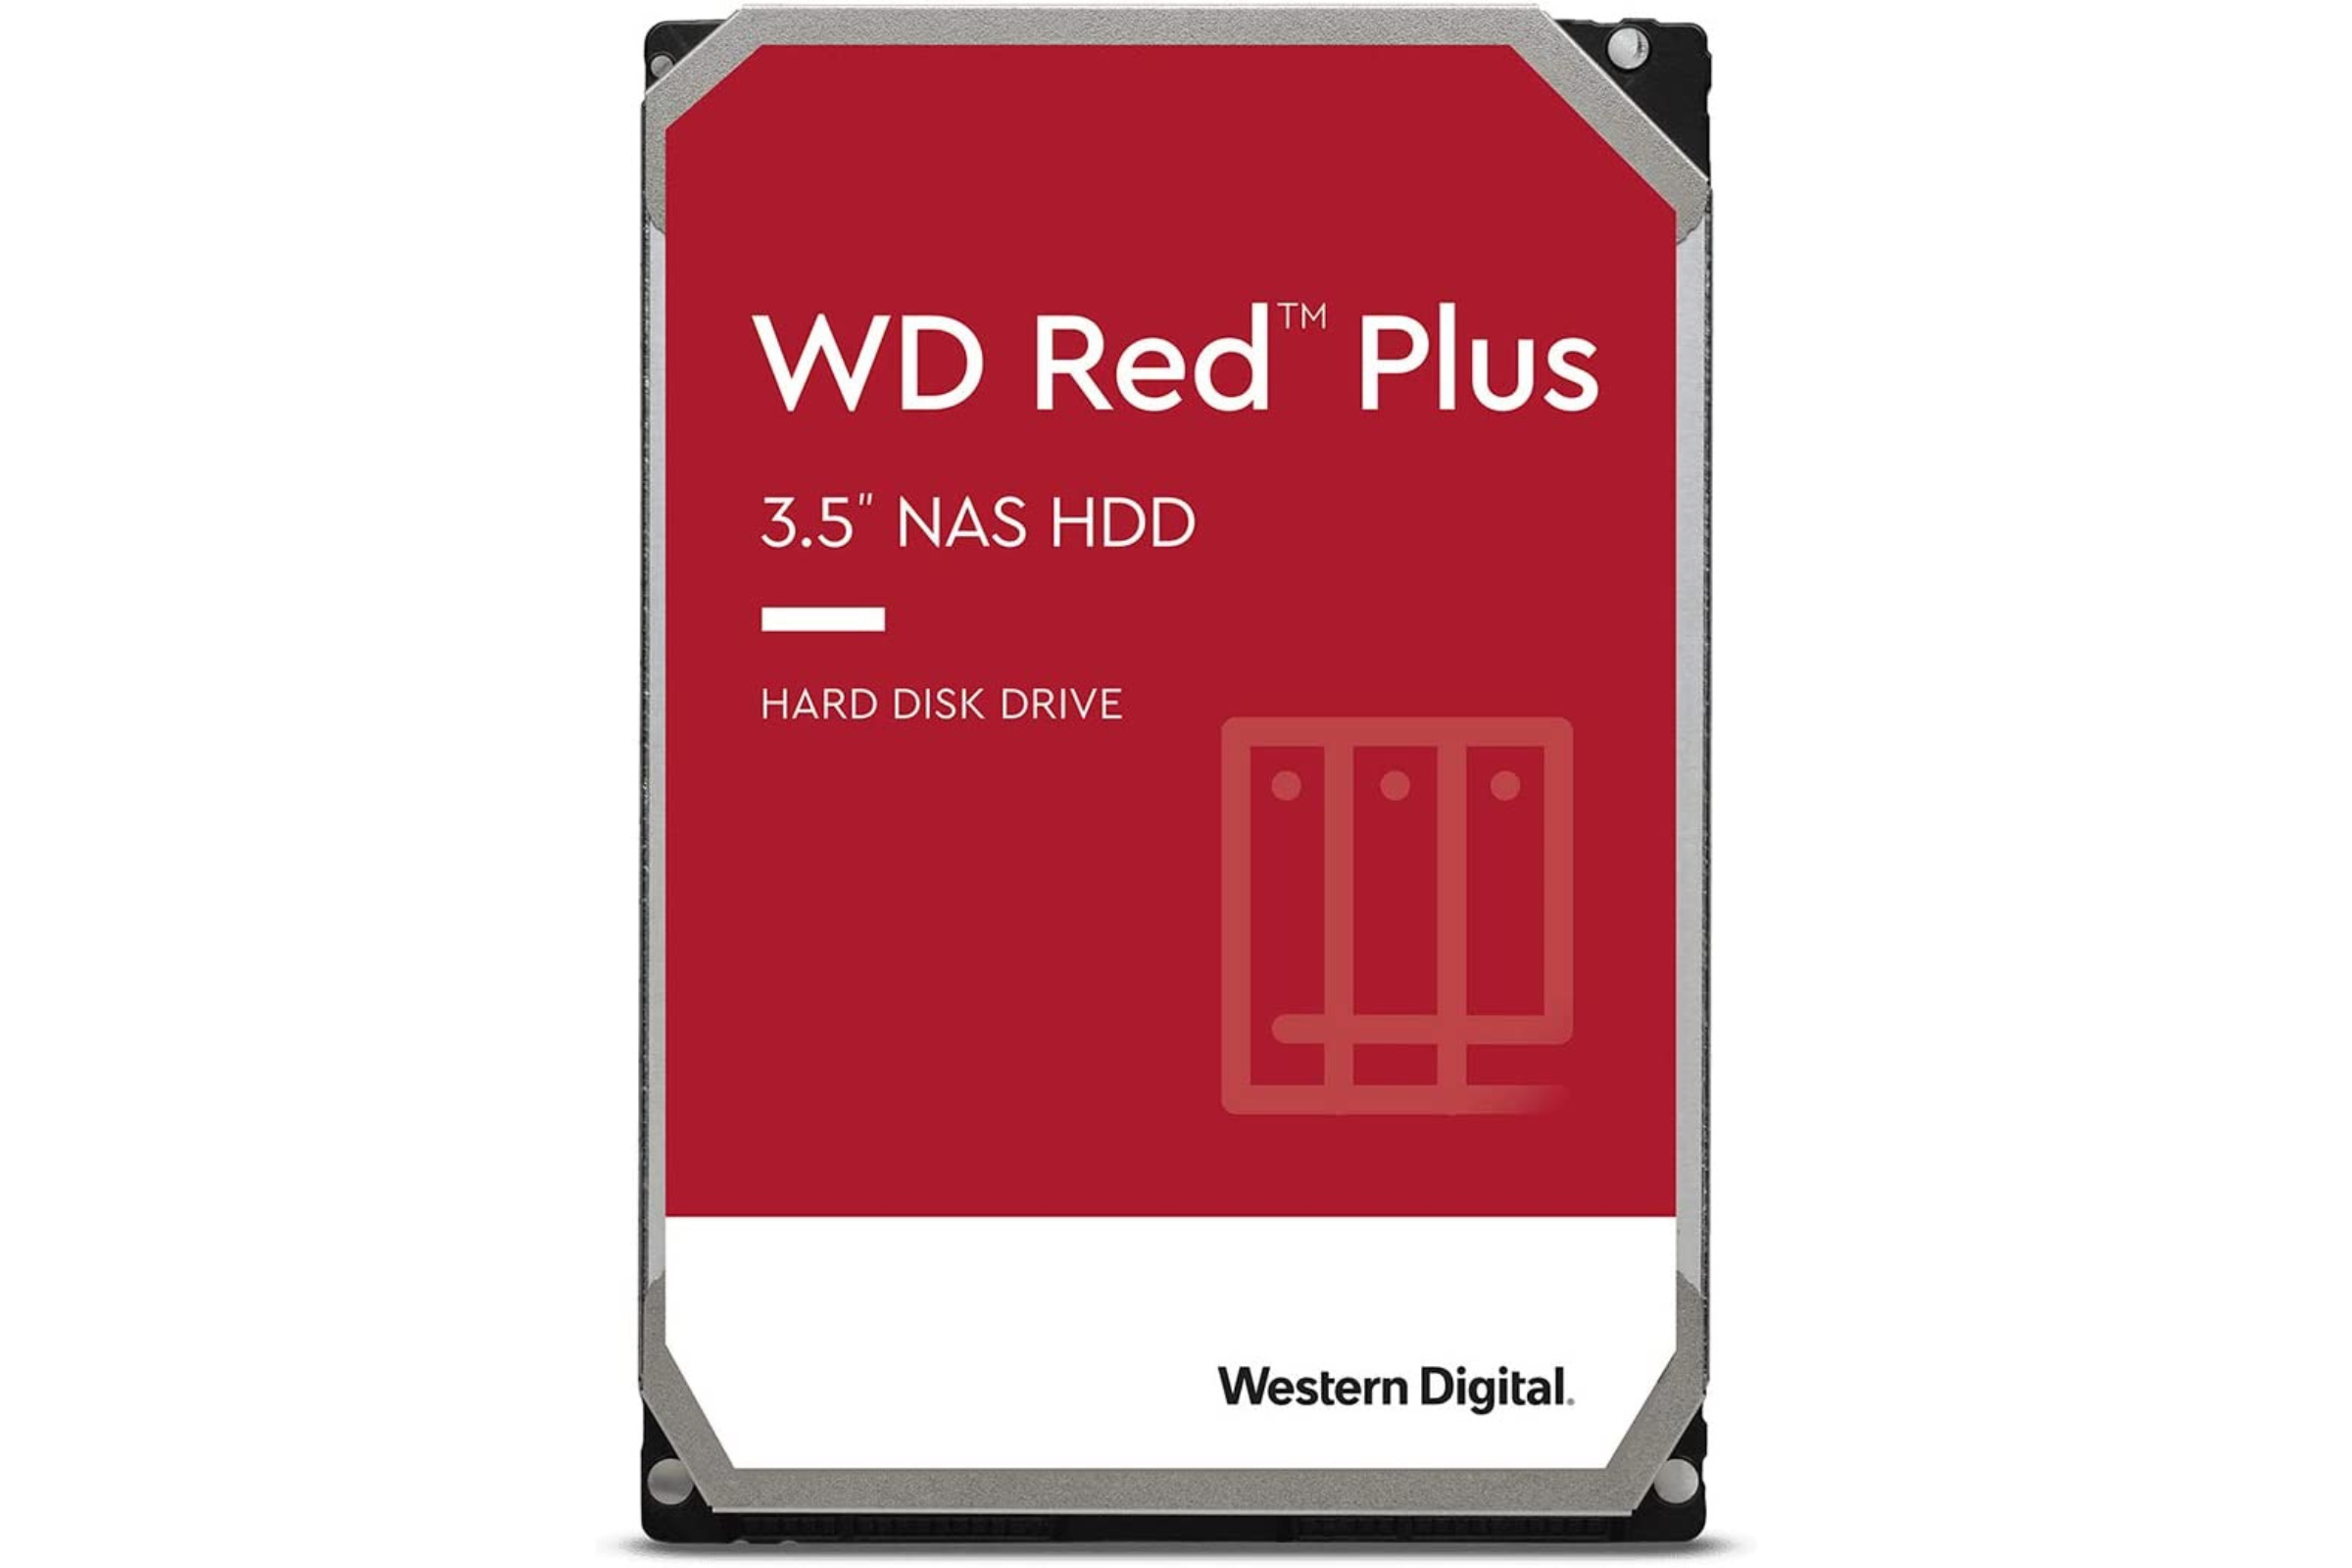 WD Red Plus NAS Internal Hard Drive